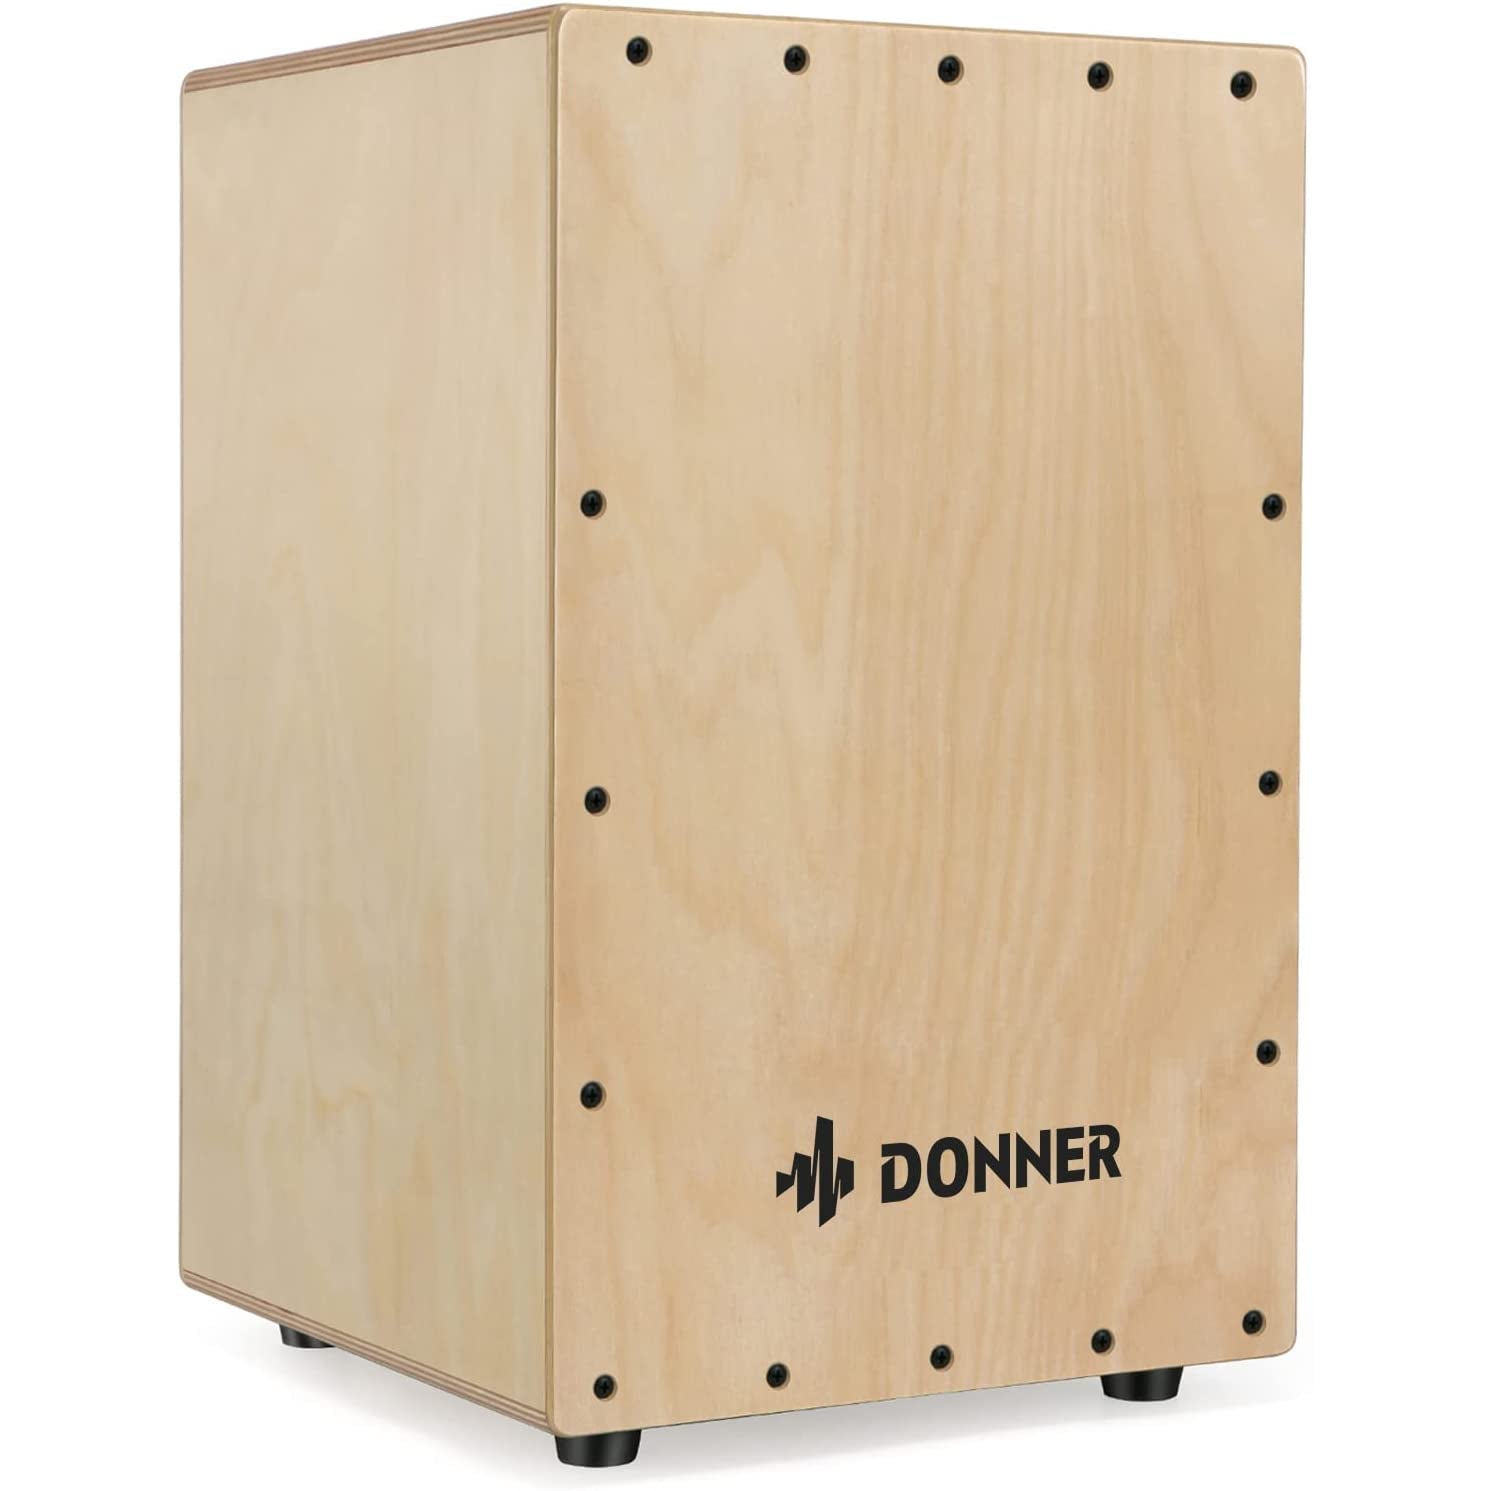 Donner DCD-1 Cajon Drum Box Full Size Wooden Cajon Drum Kit Birch Wood